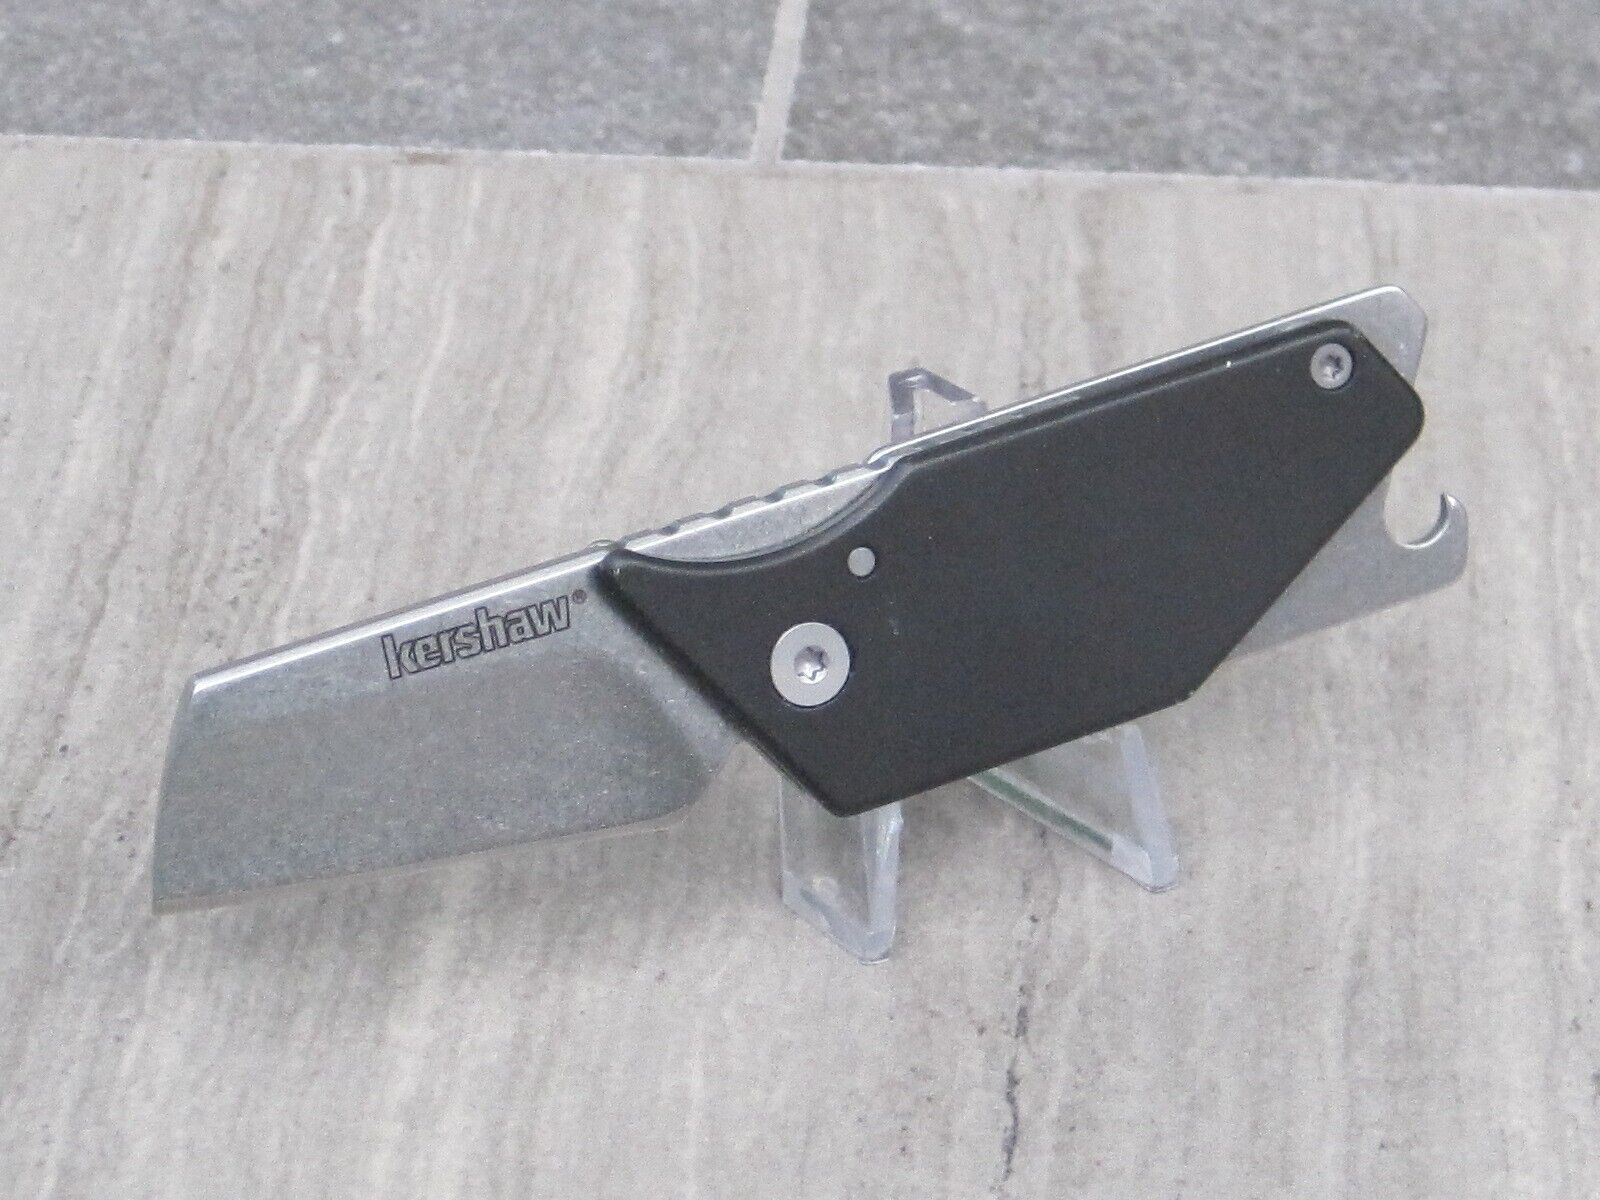 KERSHAW Pub Pocketknife, model 4036 BLKX, orig. pkg.